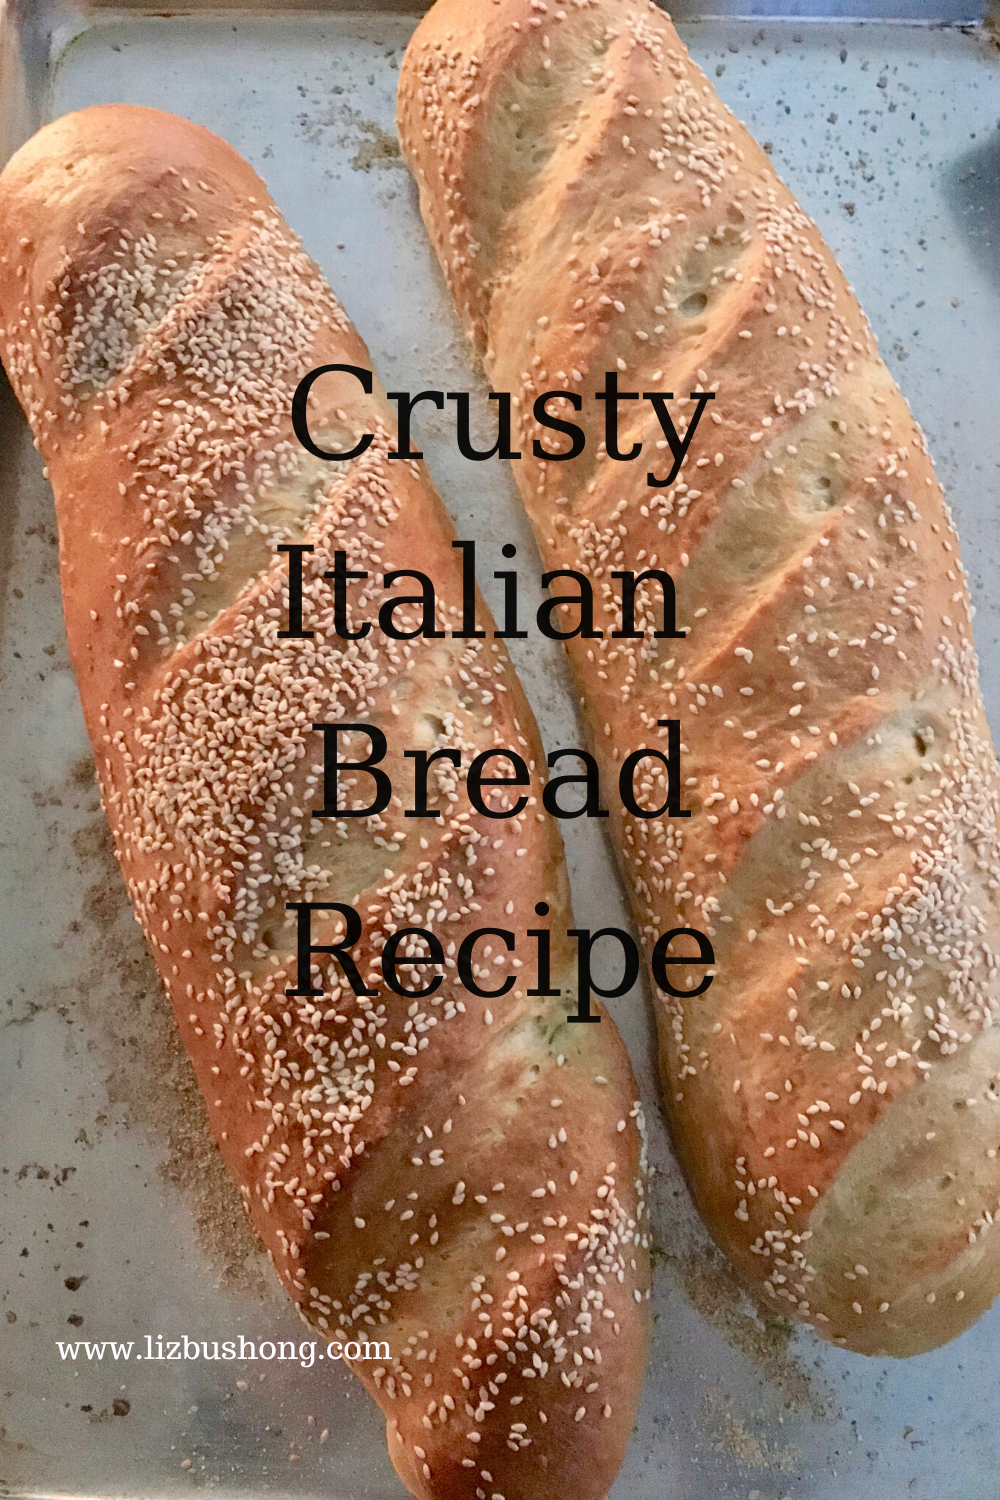 Crusty Italian Bread Loaves lizbushong.com